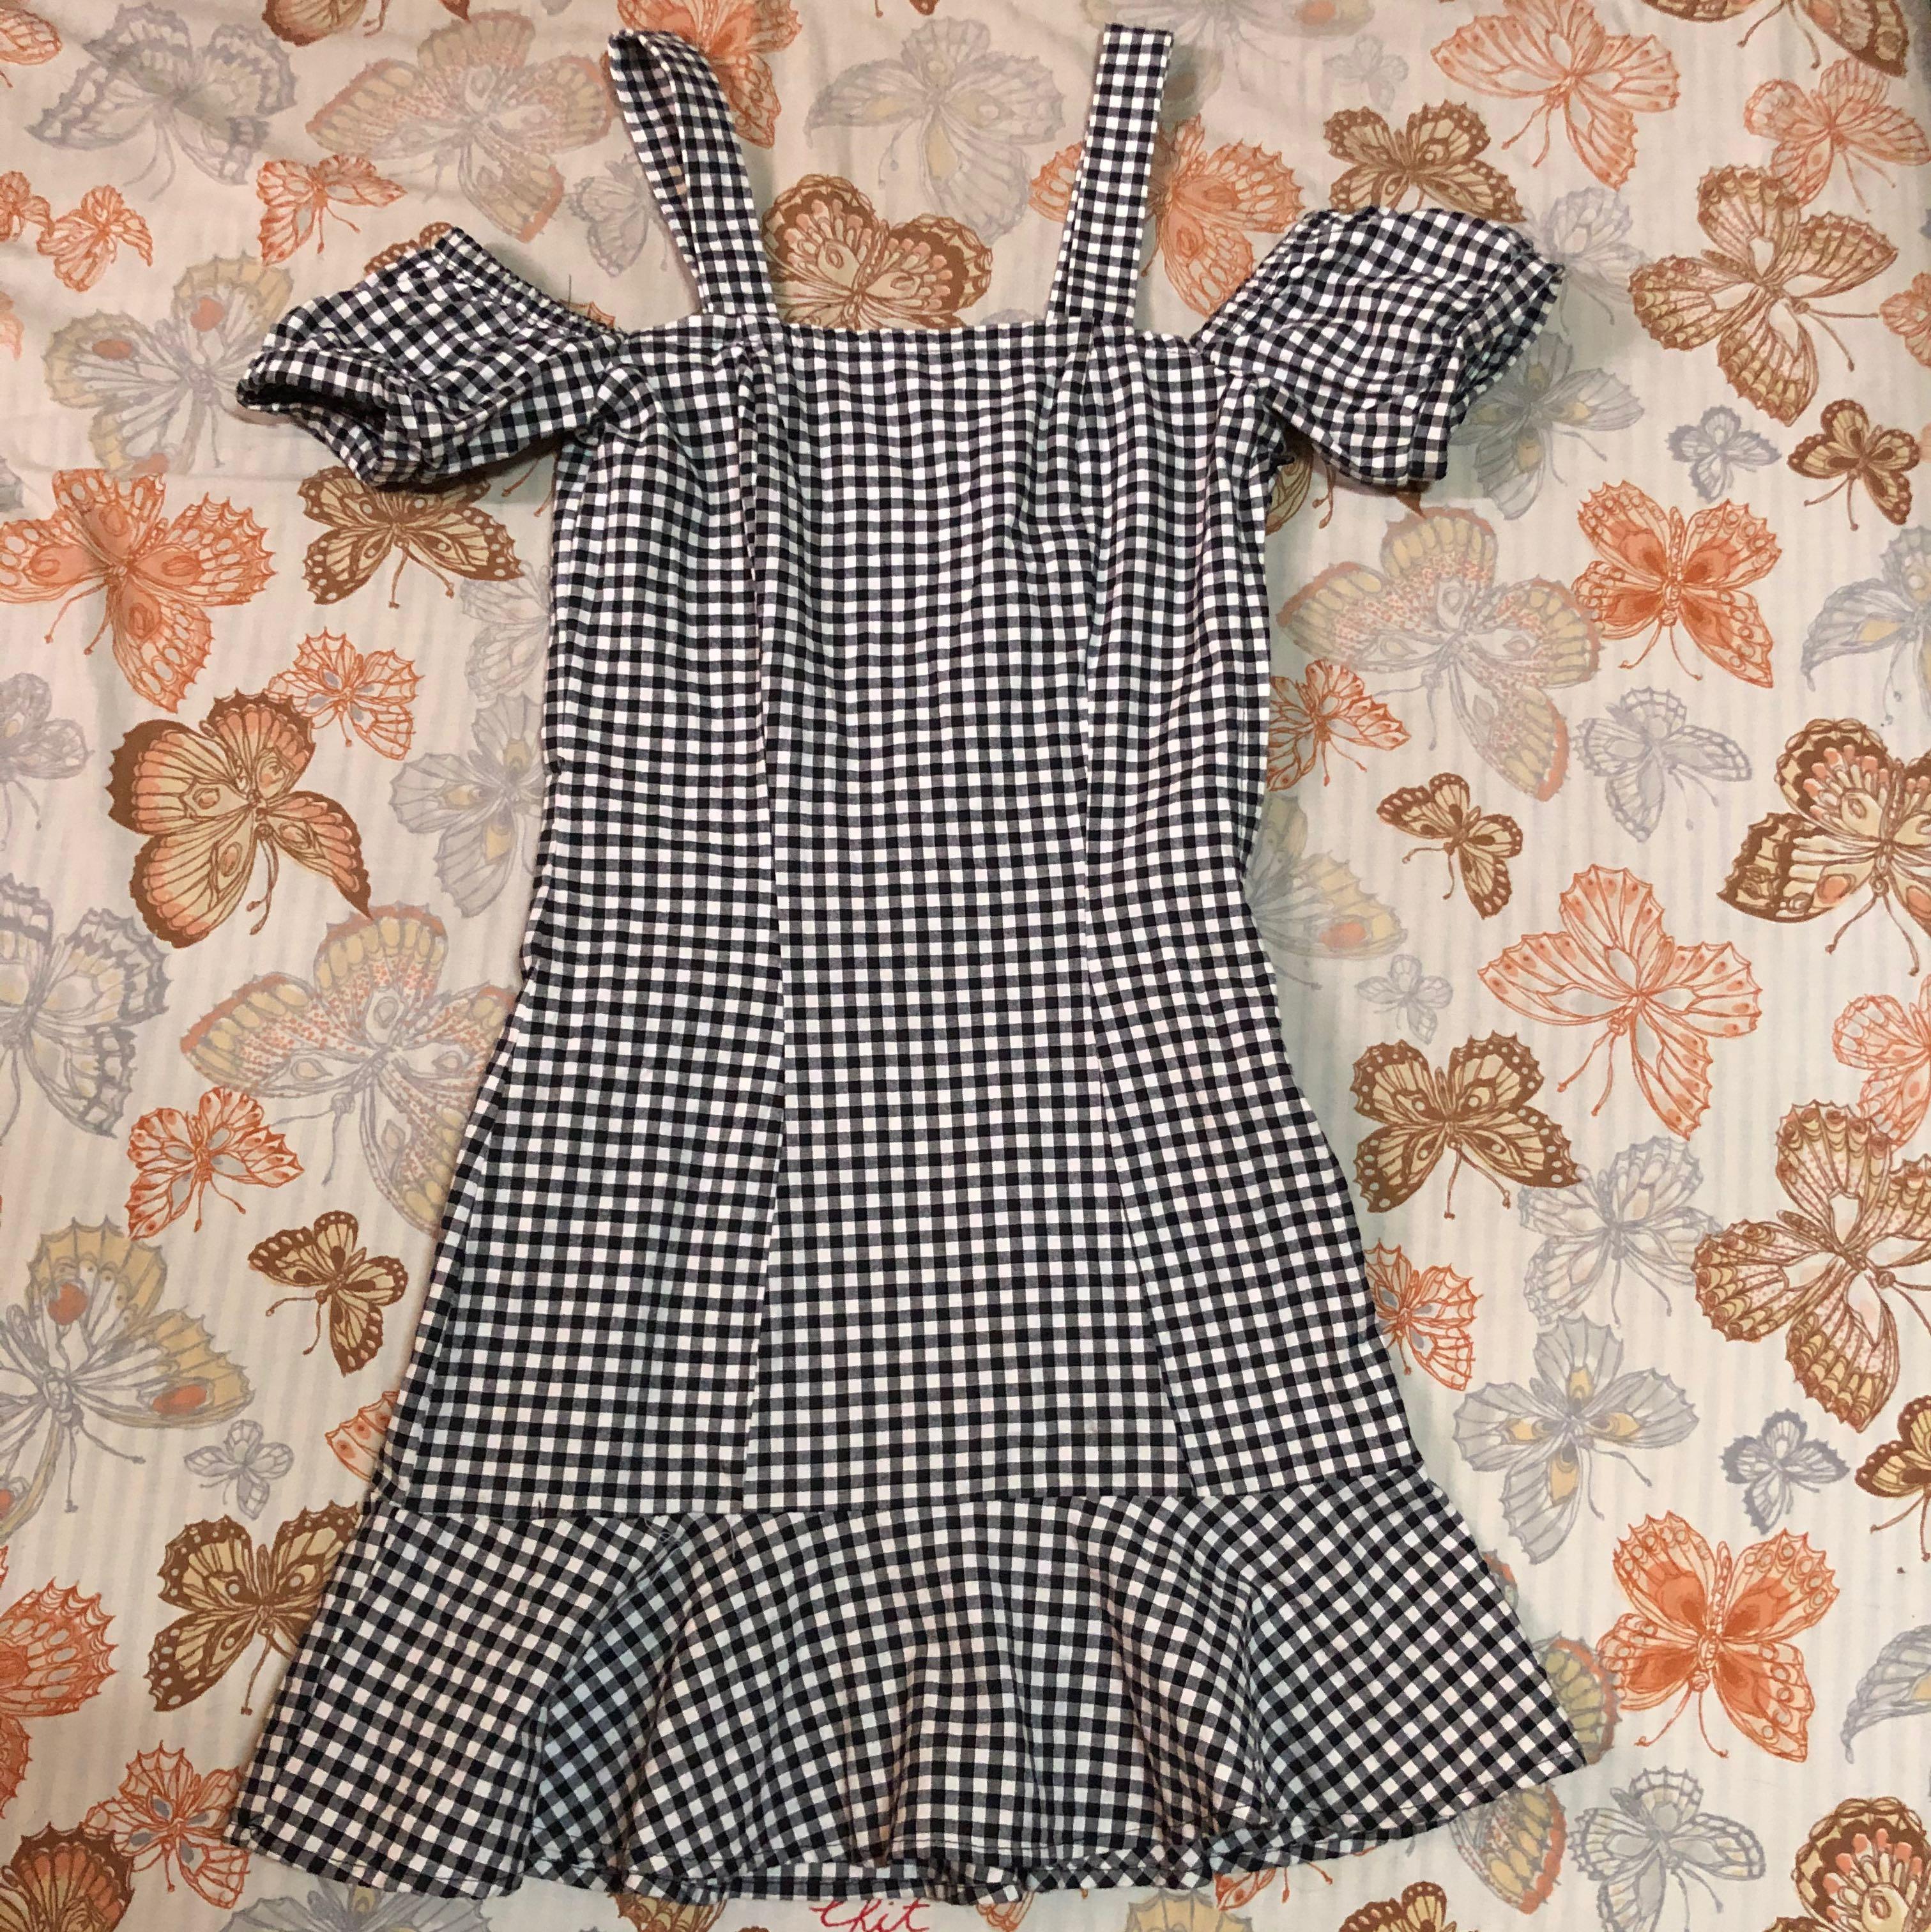 h&m checkered dress